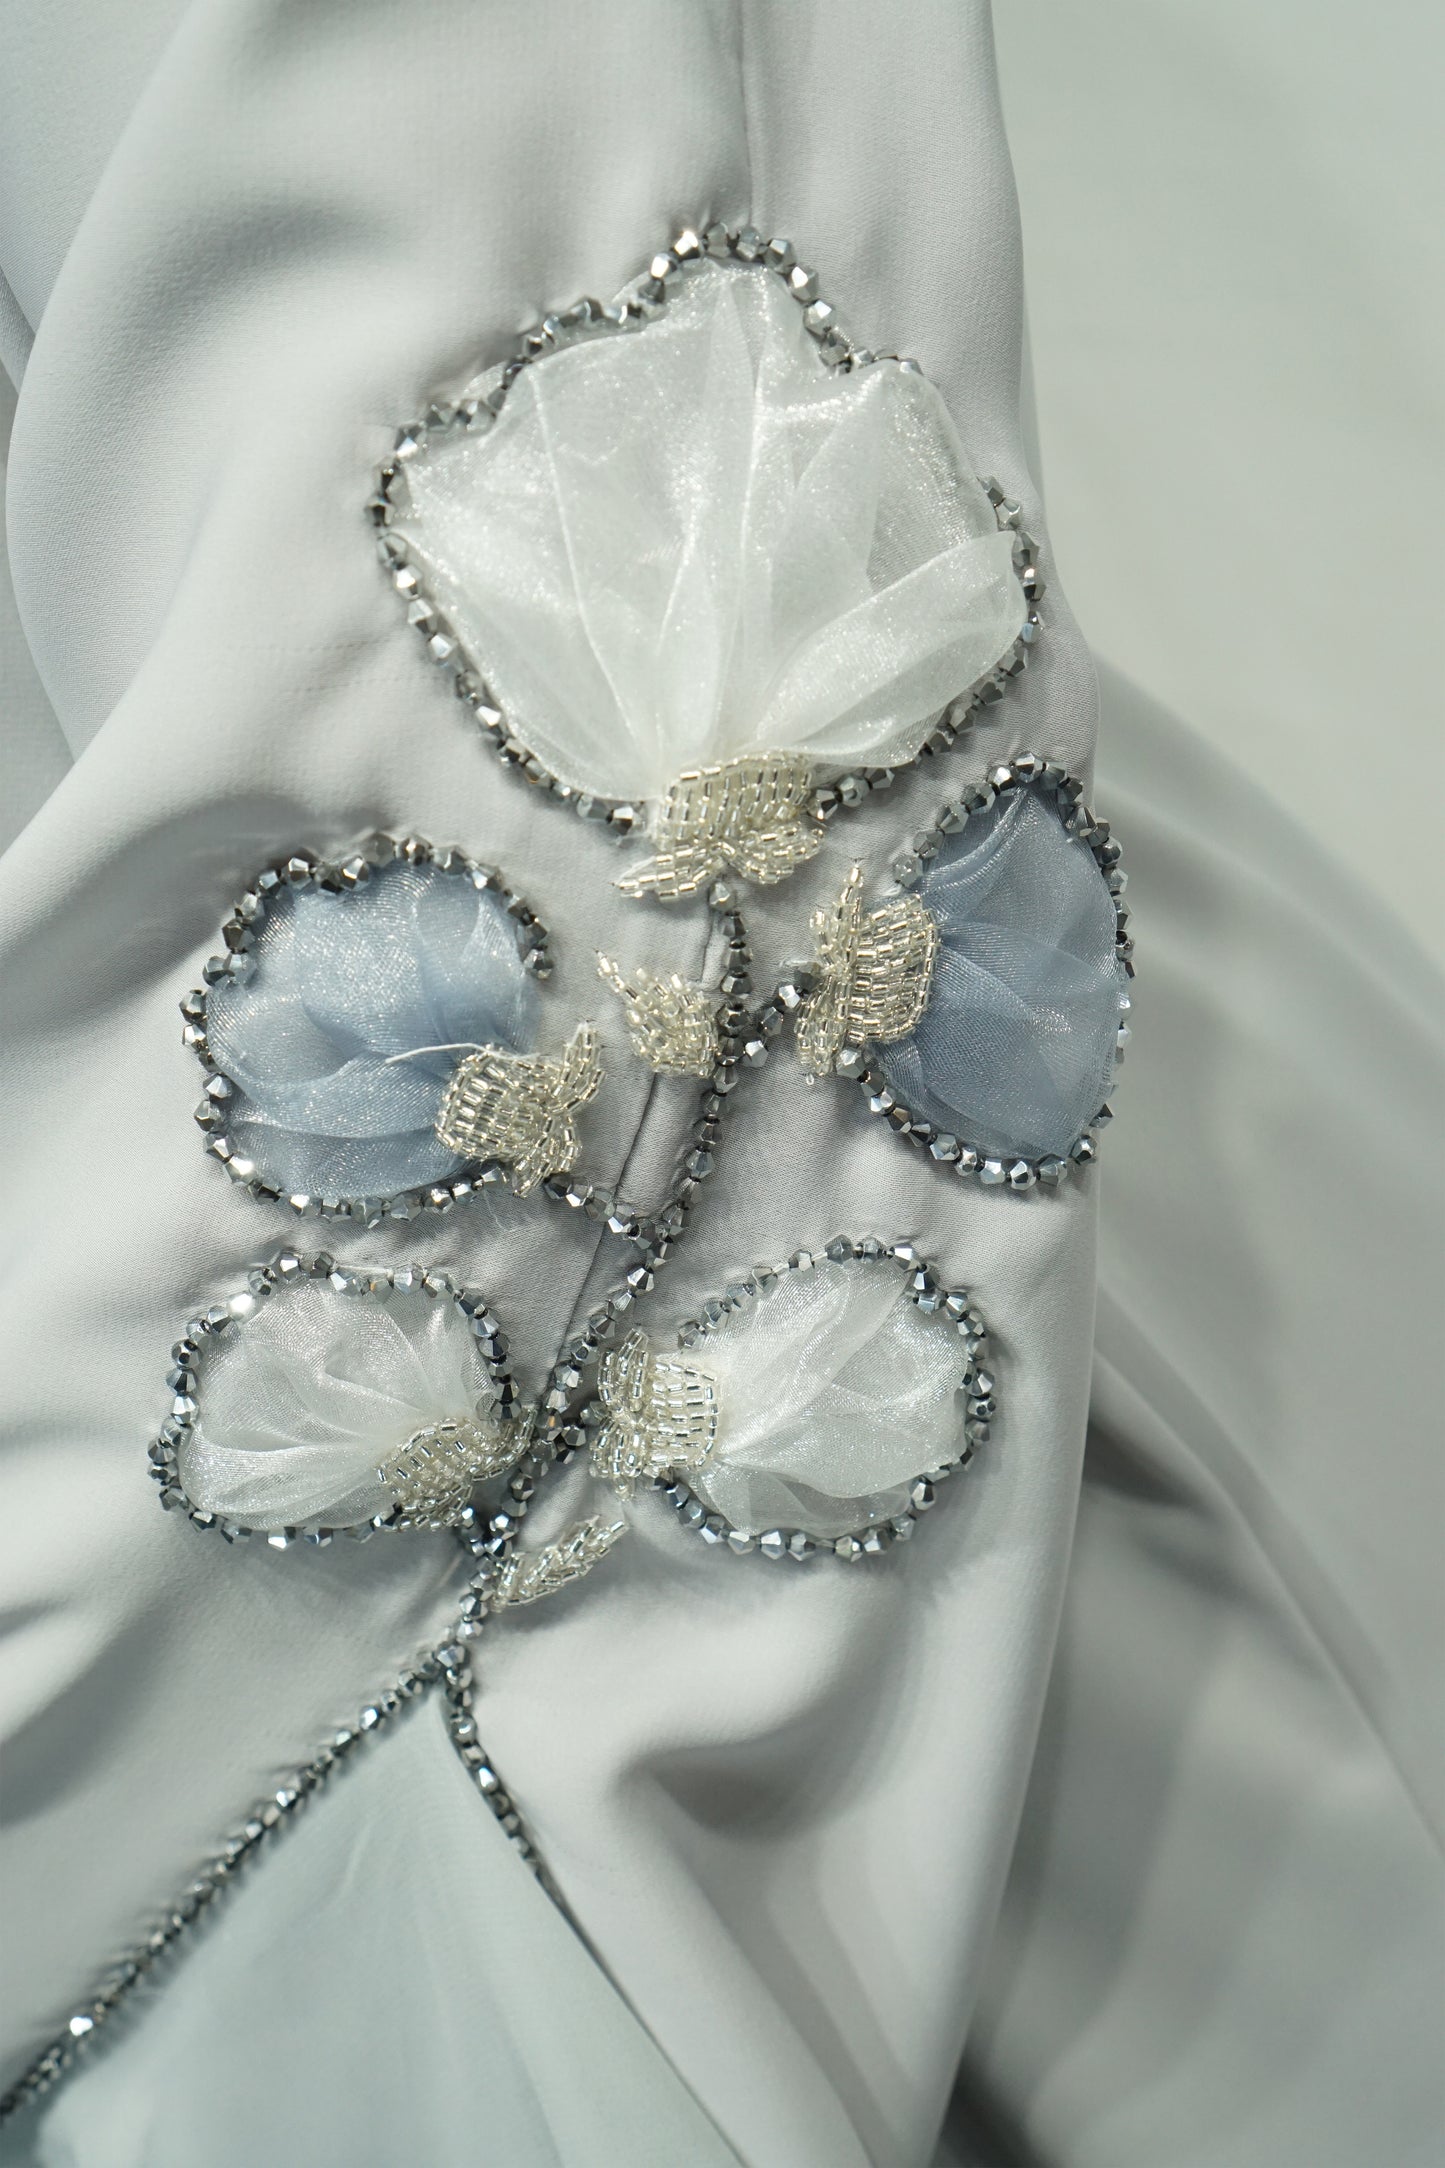 Light Blue Open Abaya with Flower Bead Embellishments